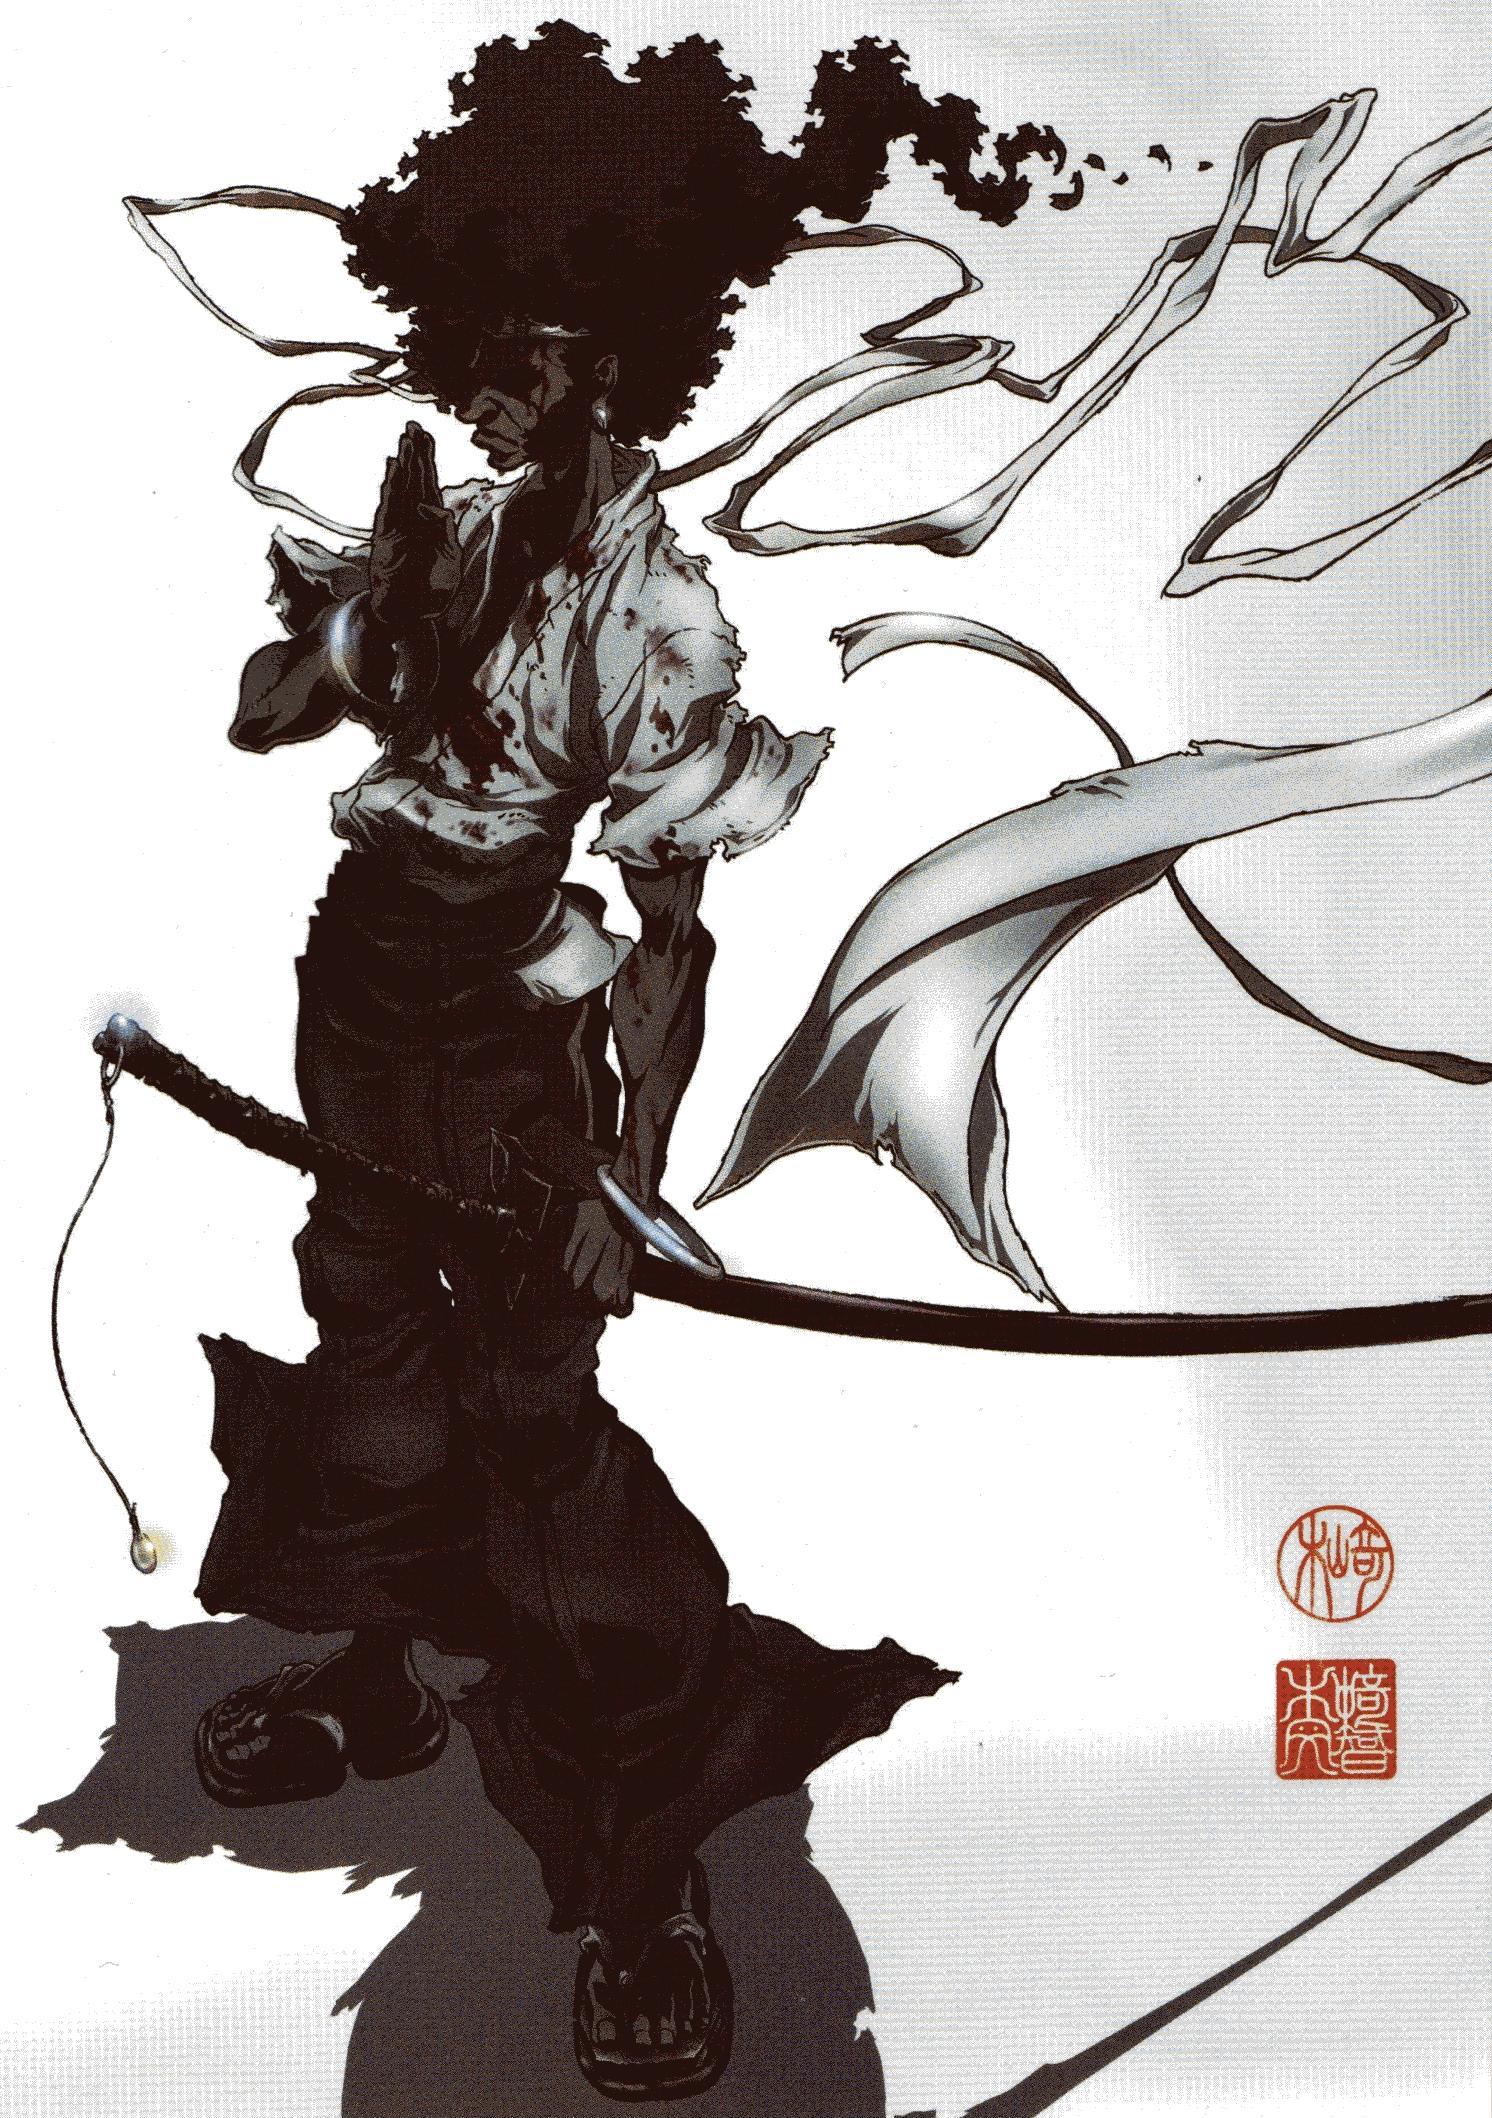 Afro Samurai: Resurrection - Director's Cut : Samuel L. Jackson, Lucy Liu,  Mark Hamill: Movies & TV 